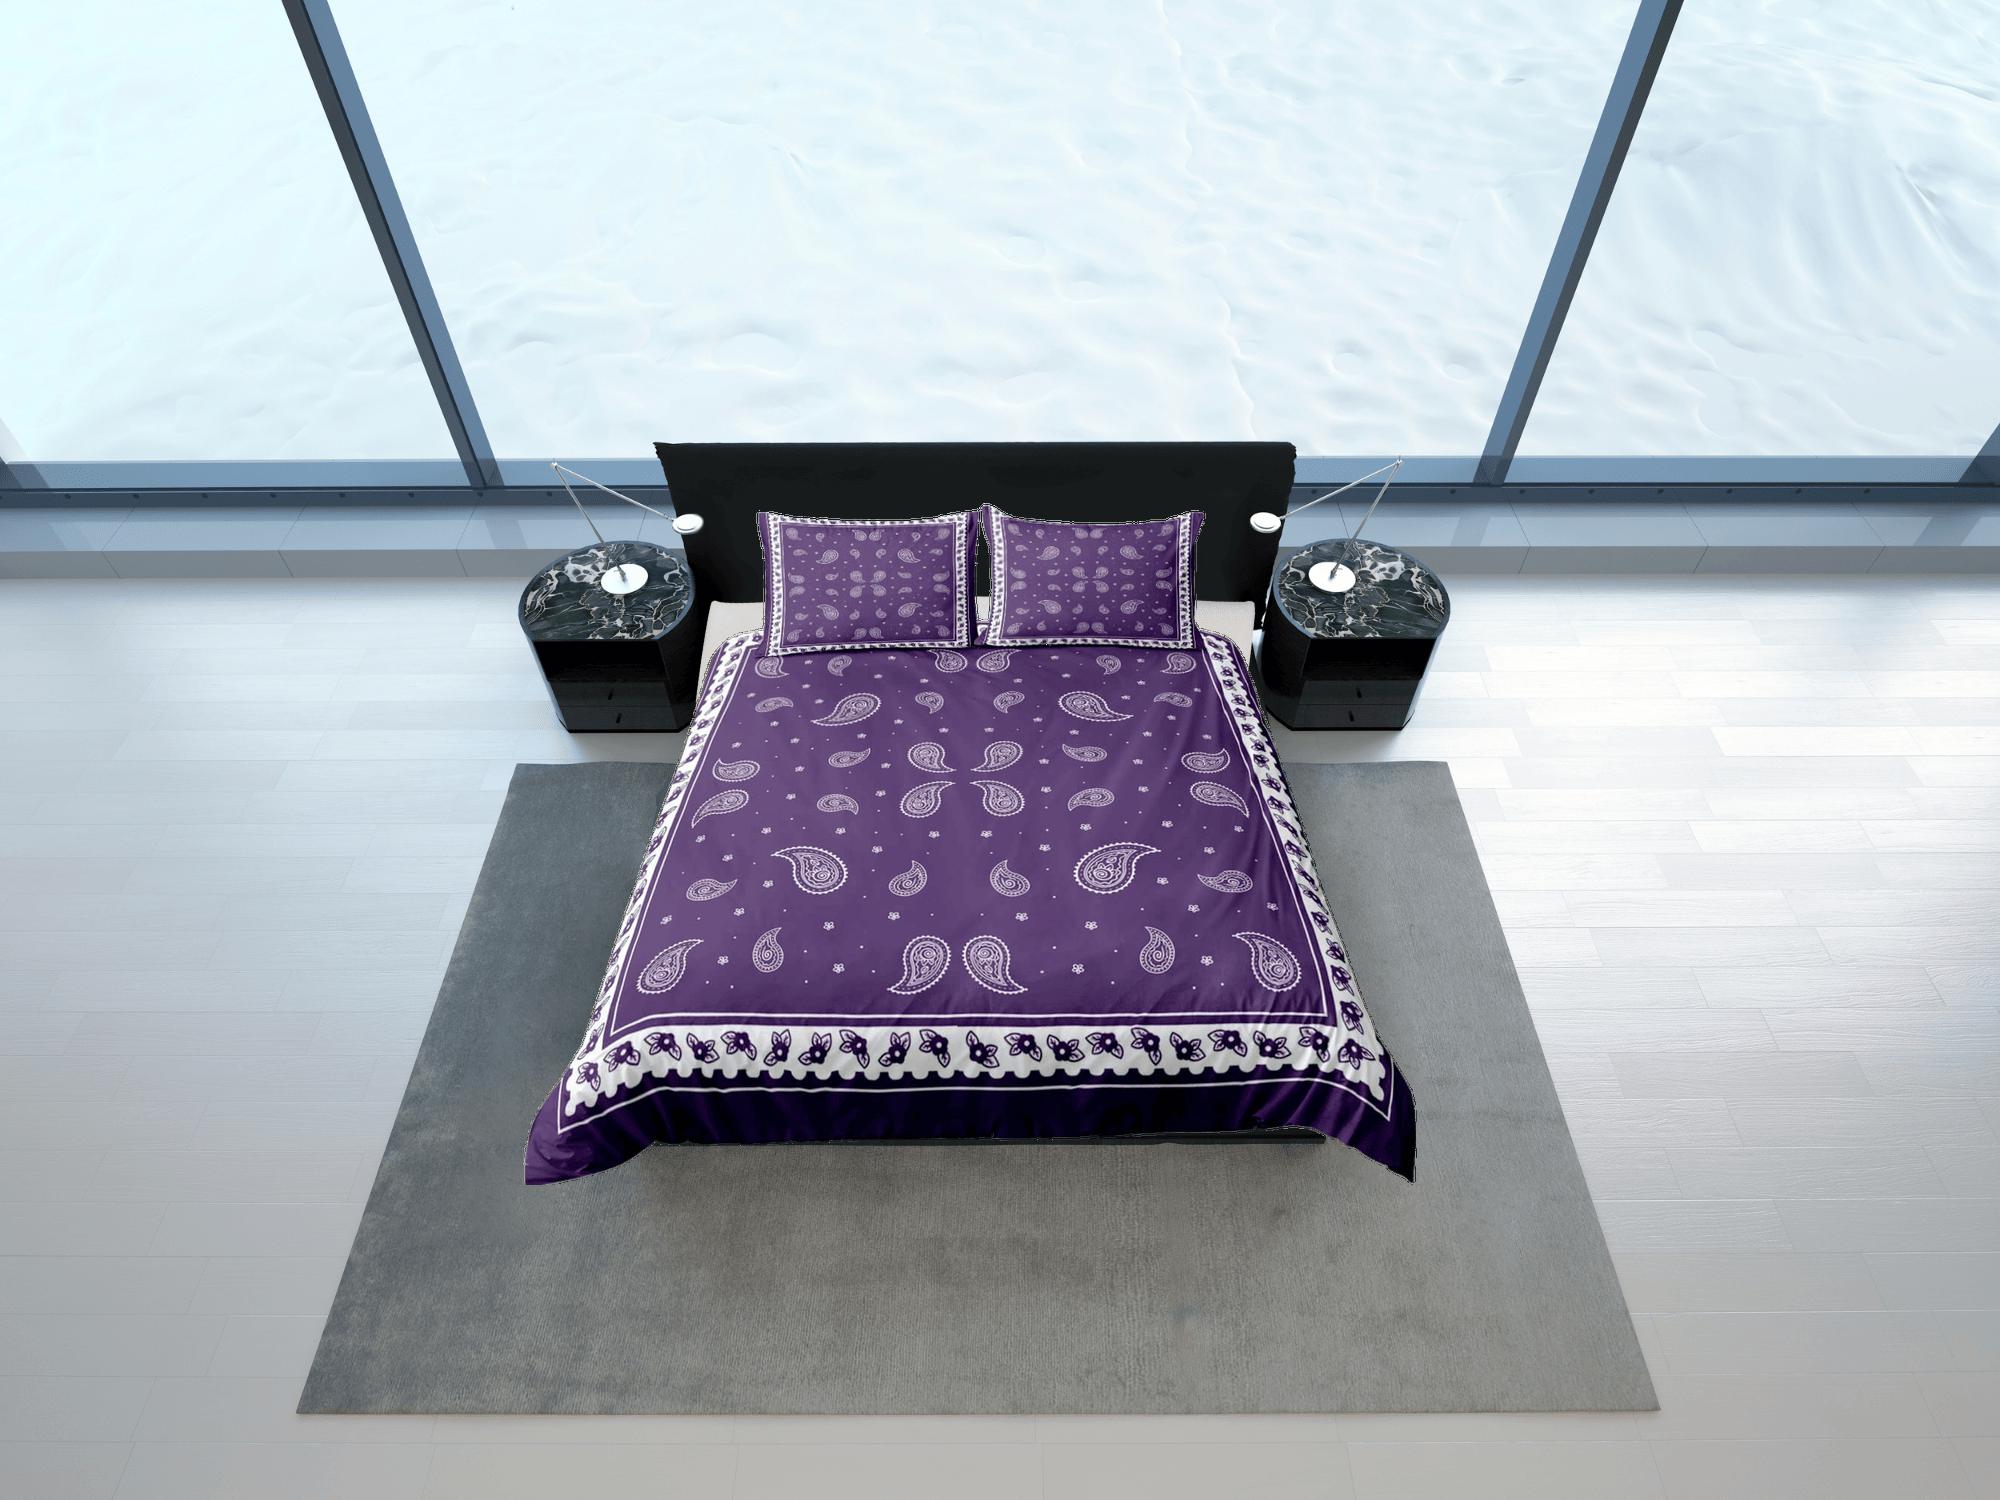 daintyduvet Purple bandana duvet cover set, aesthetic room decor bedding set full, king, queen size, abstract boho bedspread, luxury bed cover